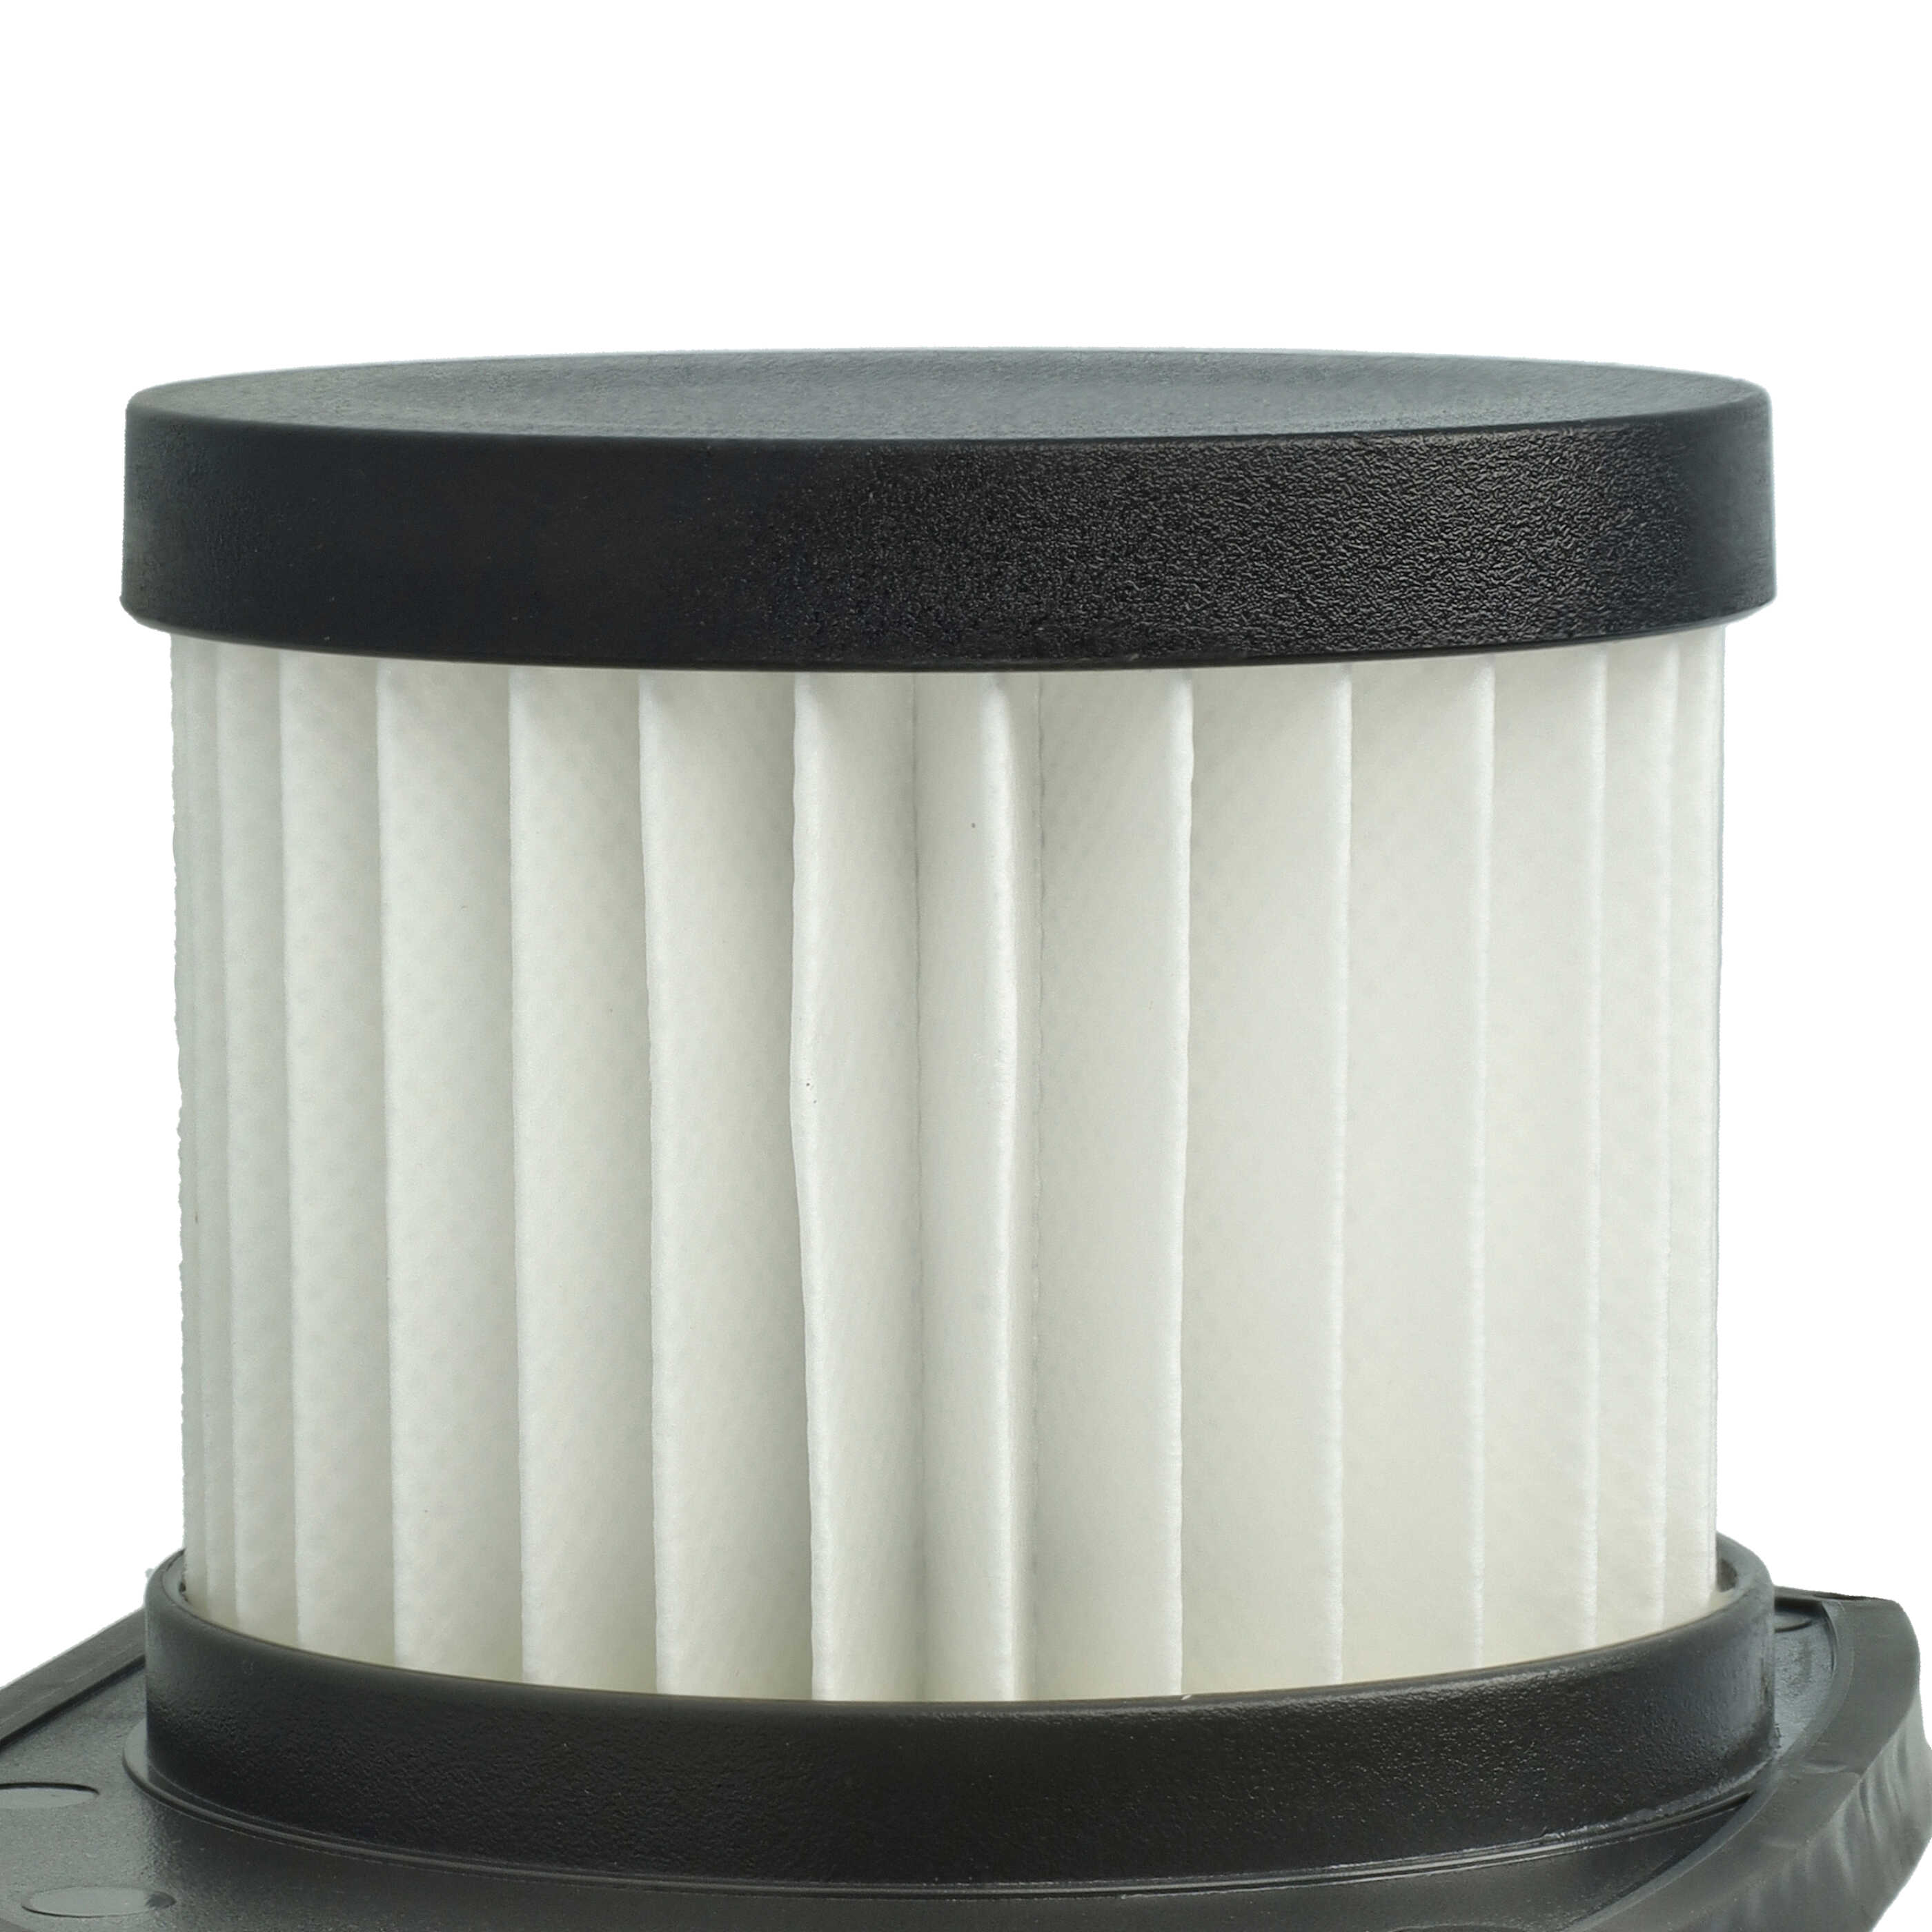 1x HEPA filter replaces Ryobi 313282001 for RyobiVacuum Cleaner